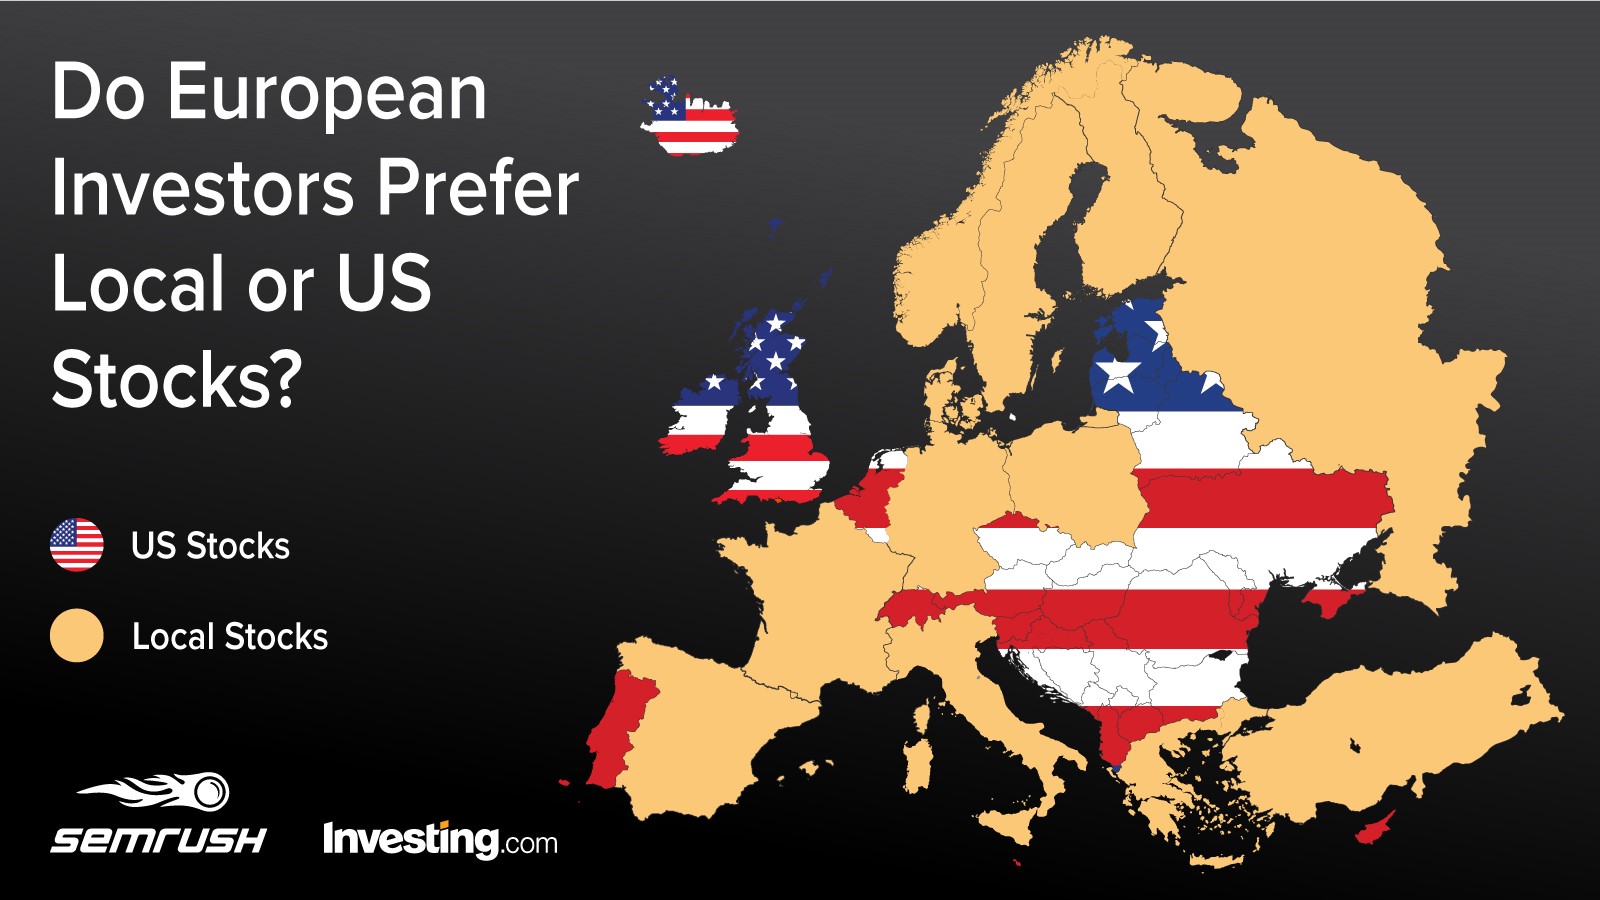 Handelen Europeanen liever in lokale of Amerikaanse aandelen